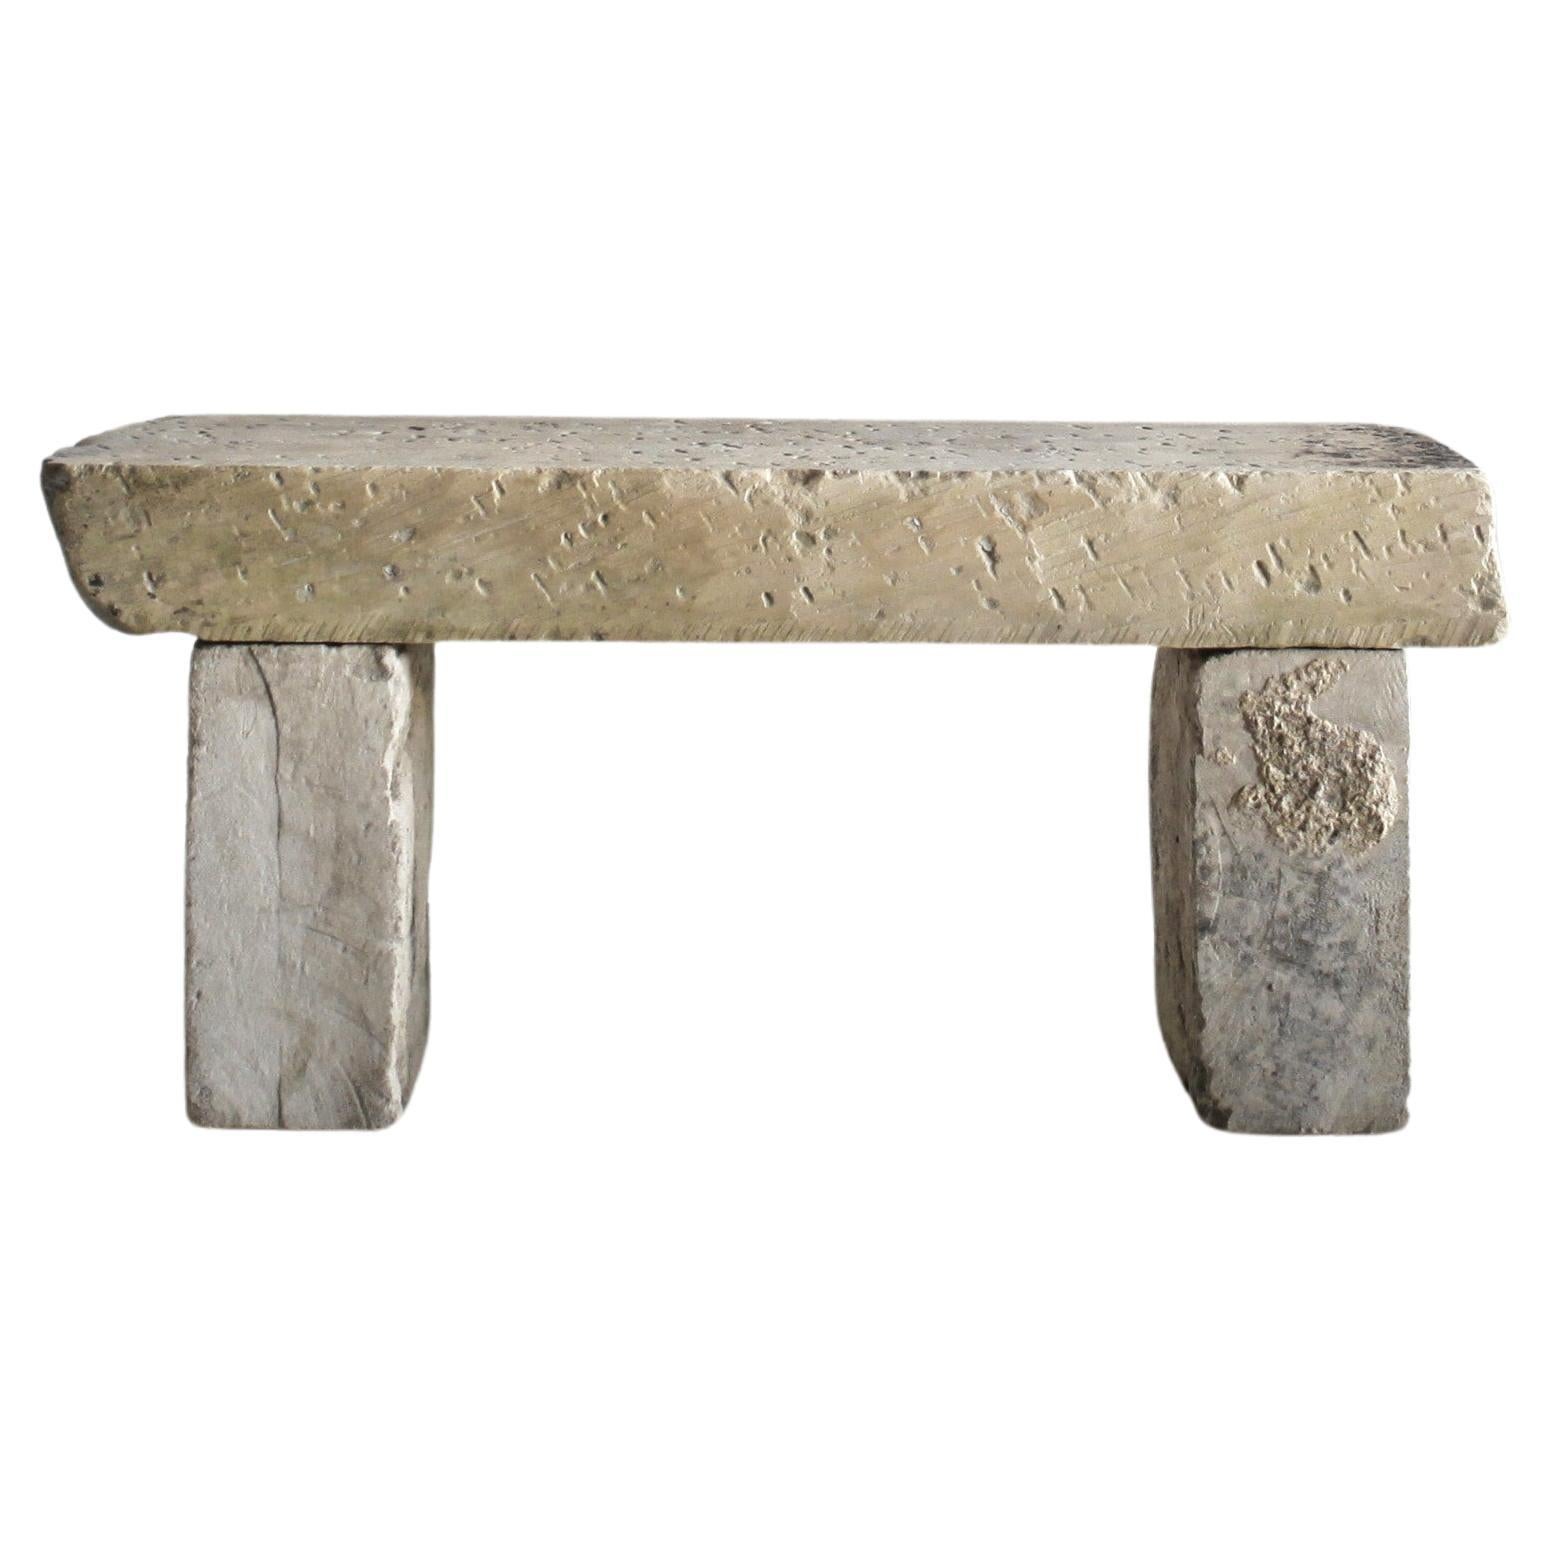 Primitive 19Th C. Carved Stone Bennch (2) Wabi Sabi For Sale